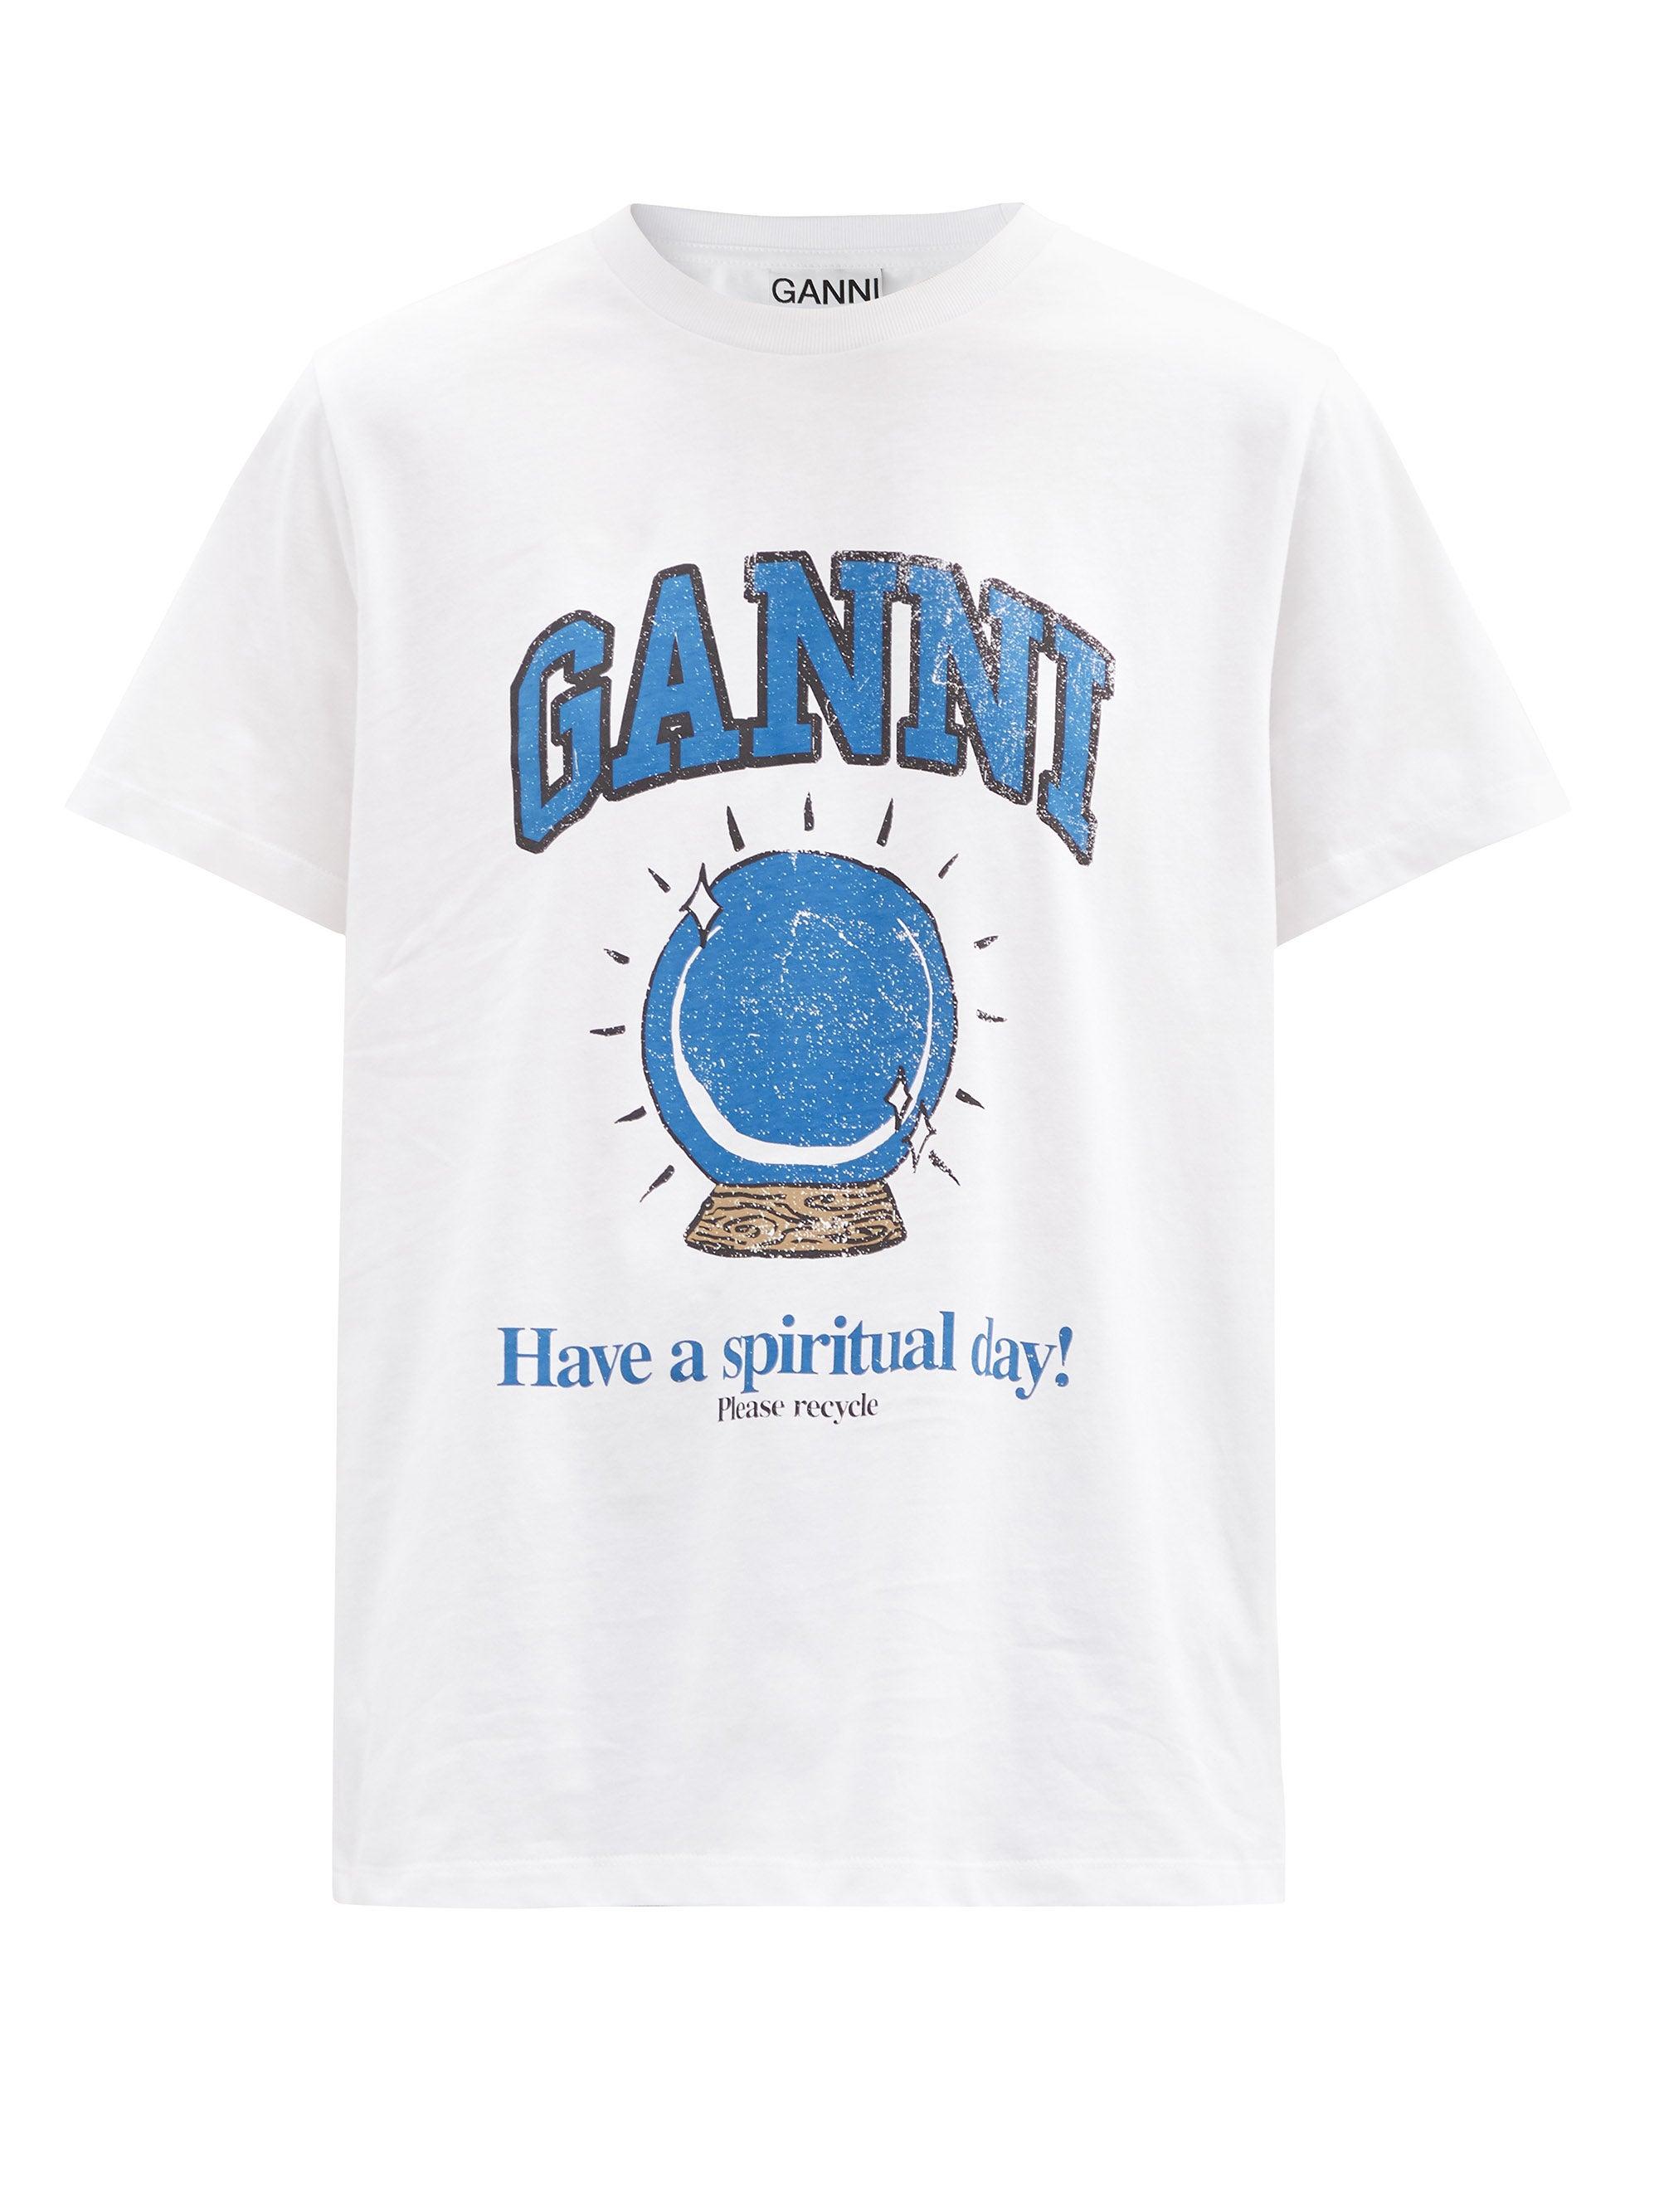 Ganni Crystal-ball Print Cotton-jersey T-shirt in Blue | Lyst